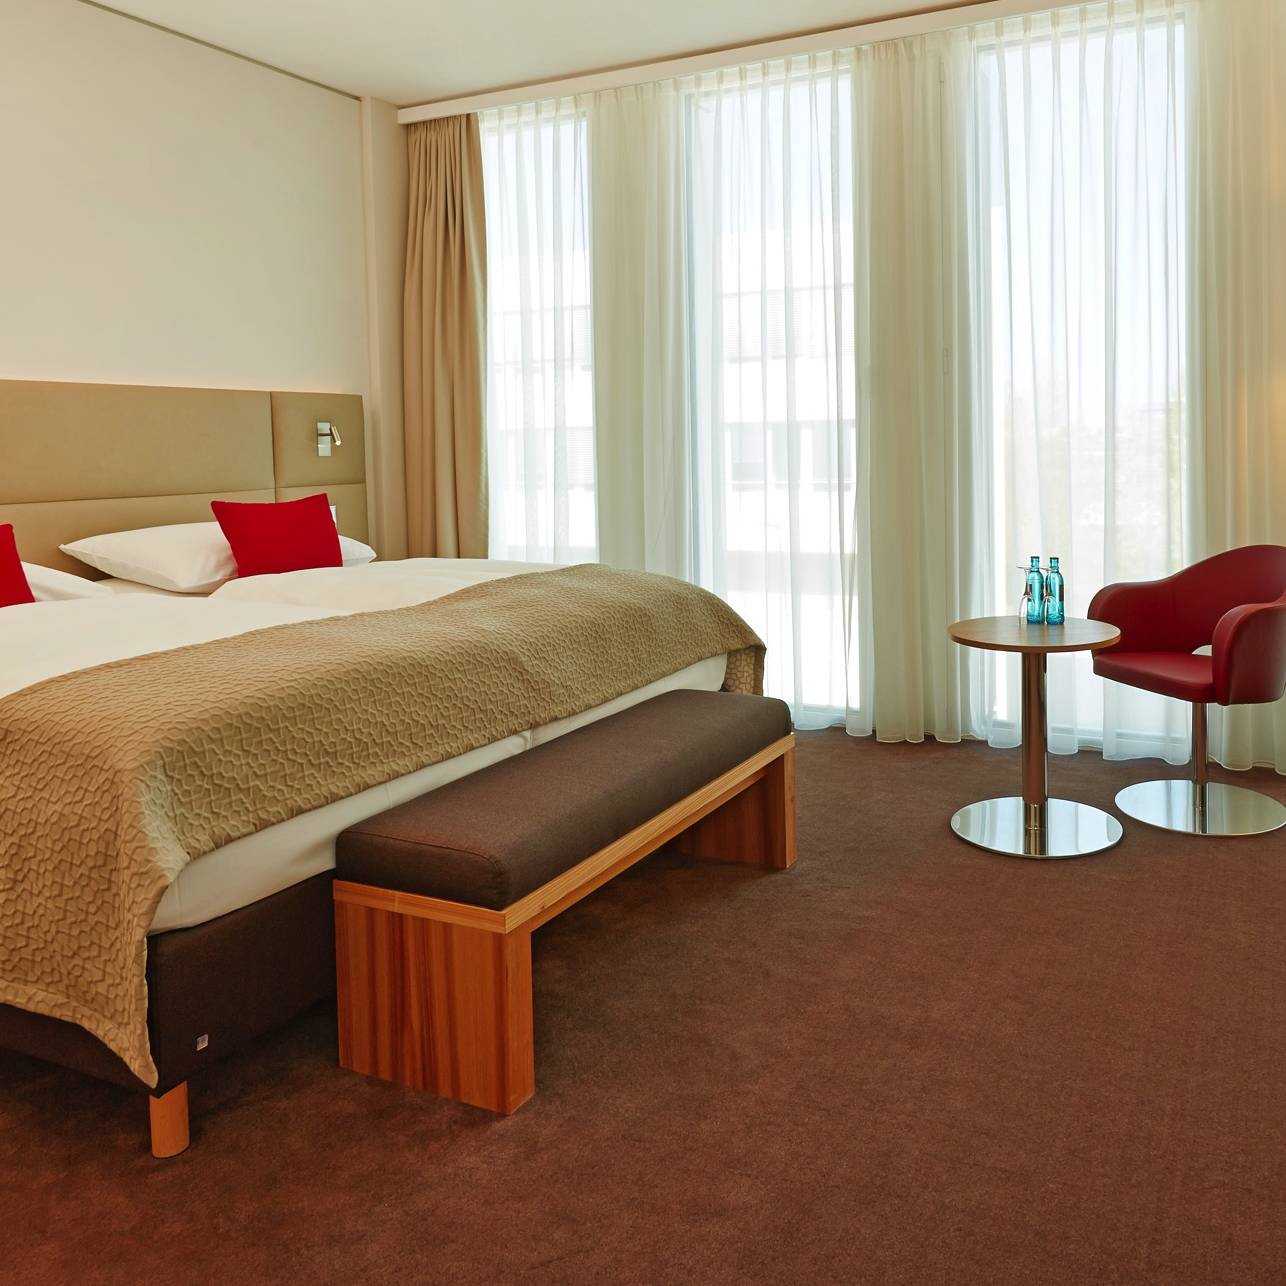 Hotel room - H4 Hotel München Messe